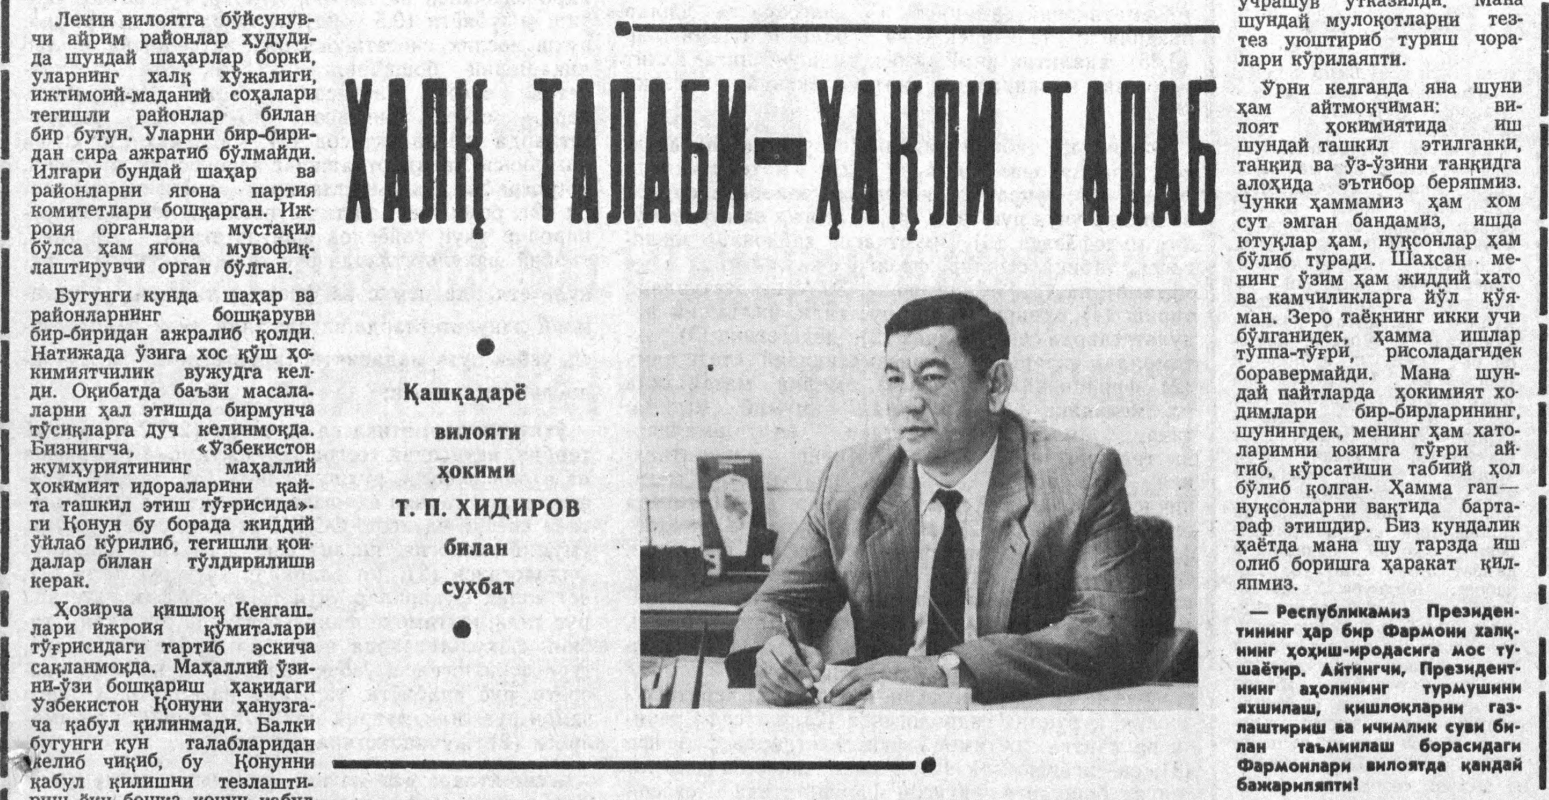 «Ўзбекистон овози» газетасининг 1992 йил 24 апрель сонидан лавҳа